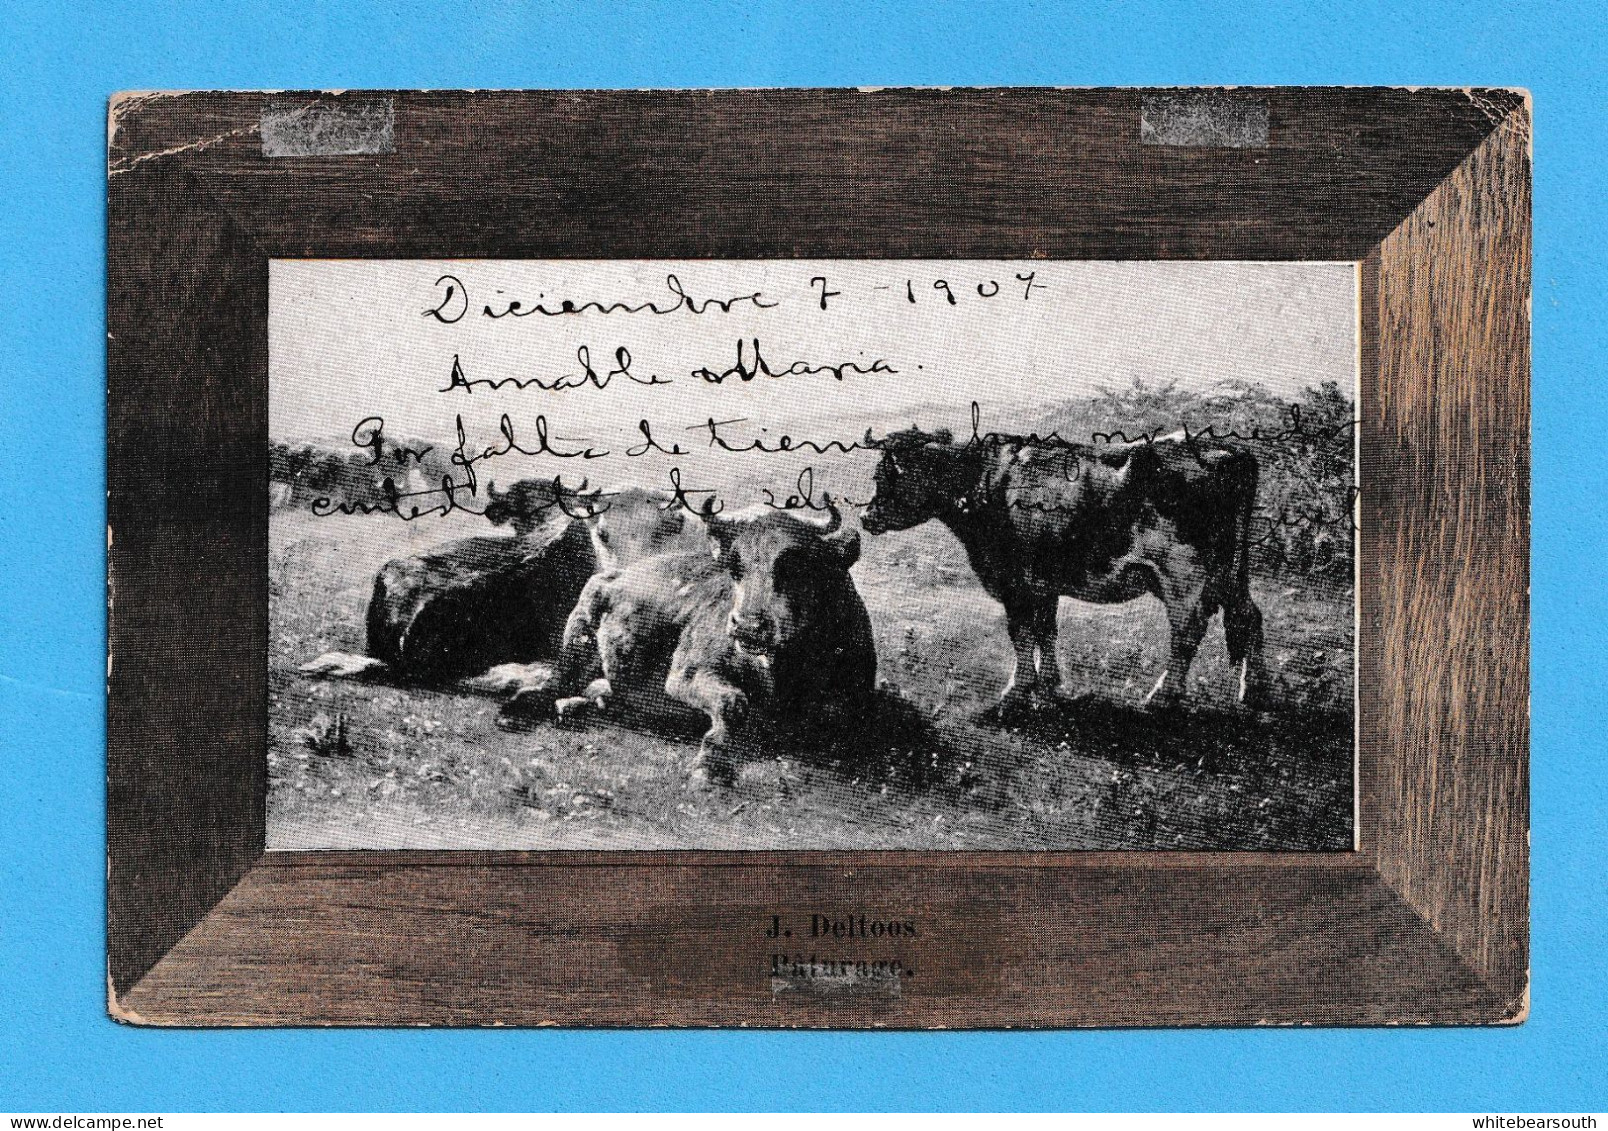 460 - FRANCE FARM CAMPO J. DELTOOS PATORAGE PASTOREO TORO COW VACA GANADO  RARE  POSTCARD - Stiere